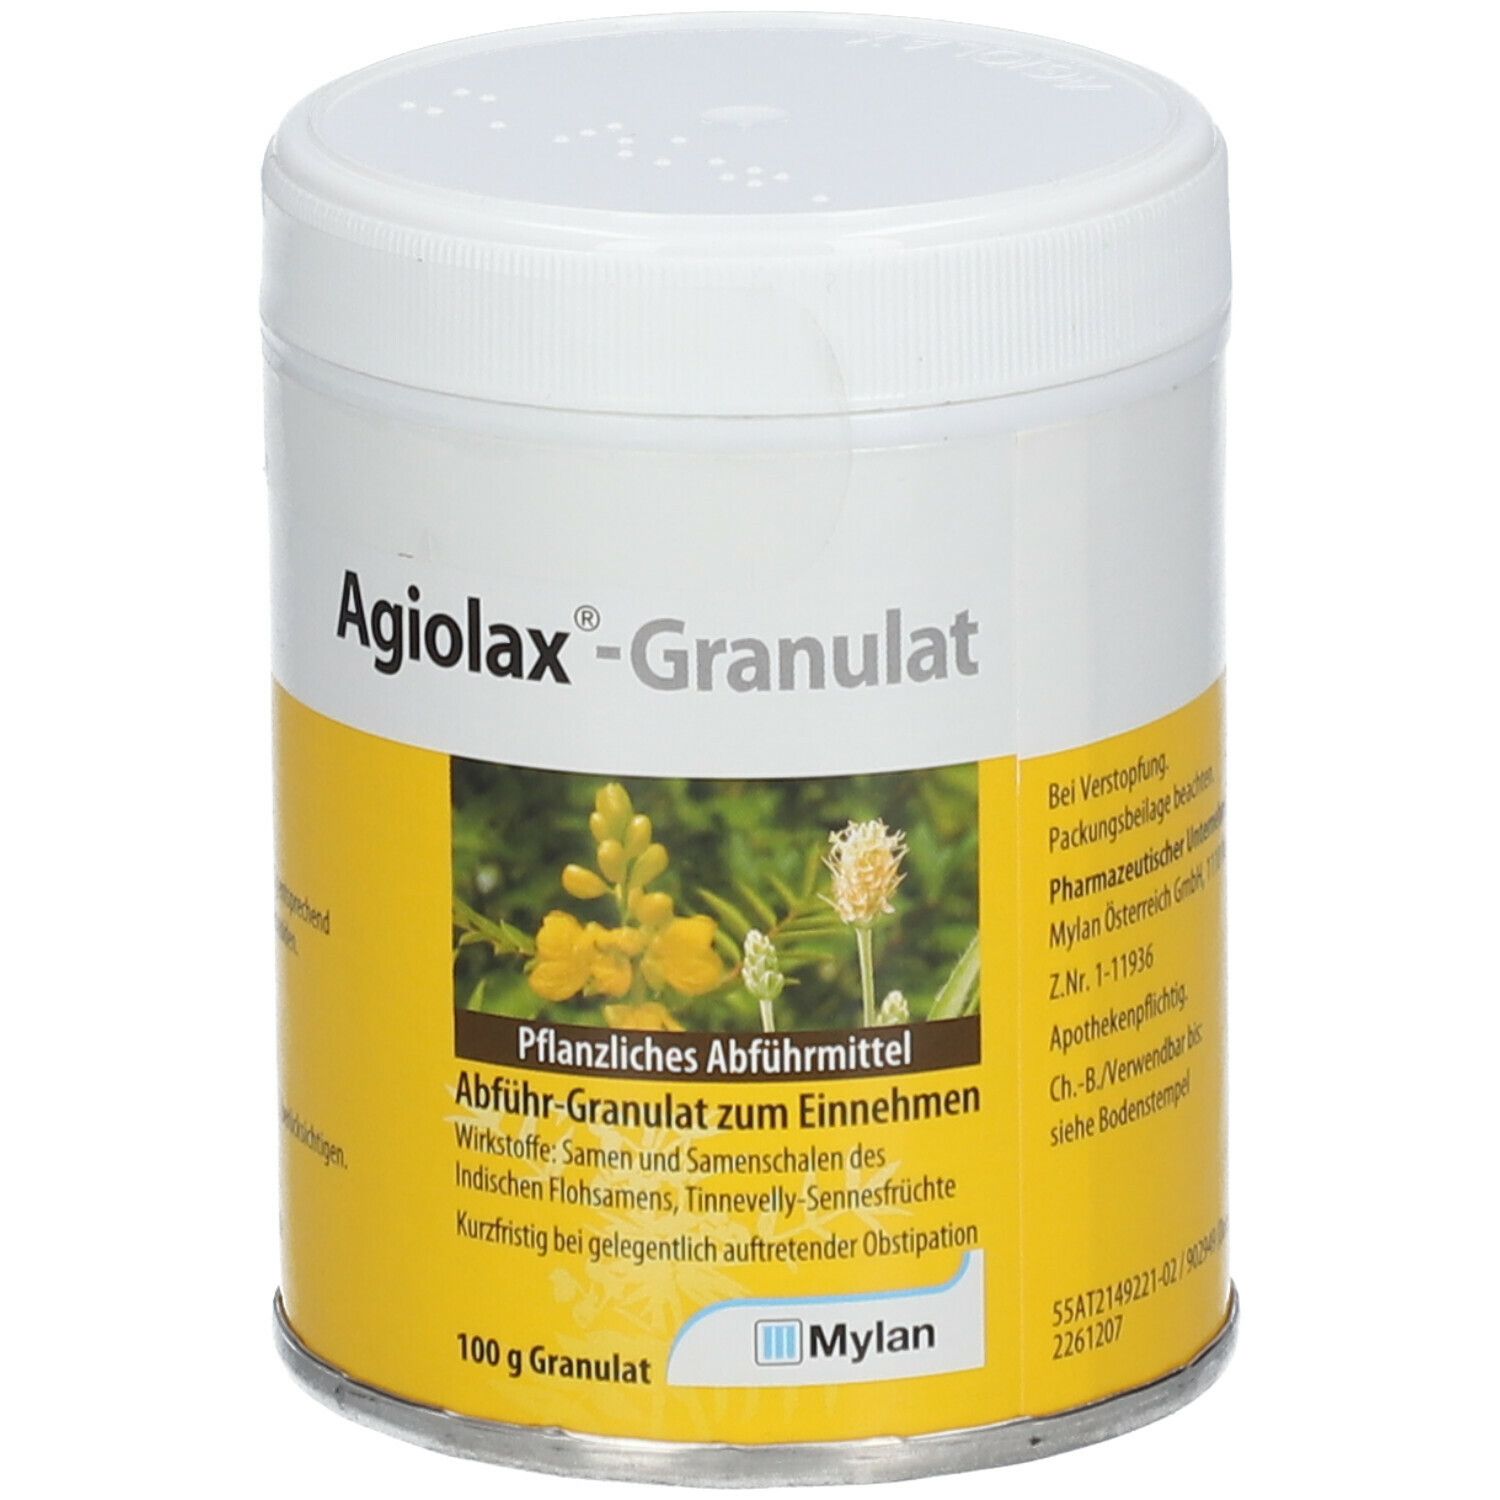 Agiolax-Granulat